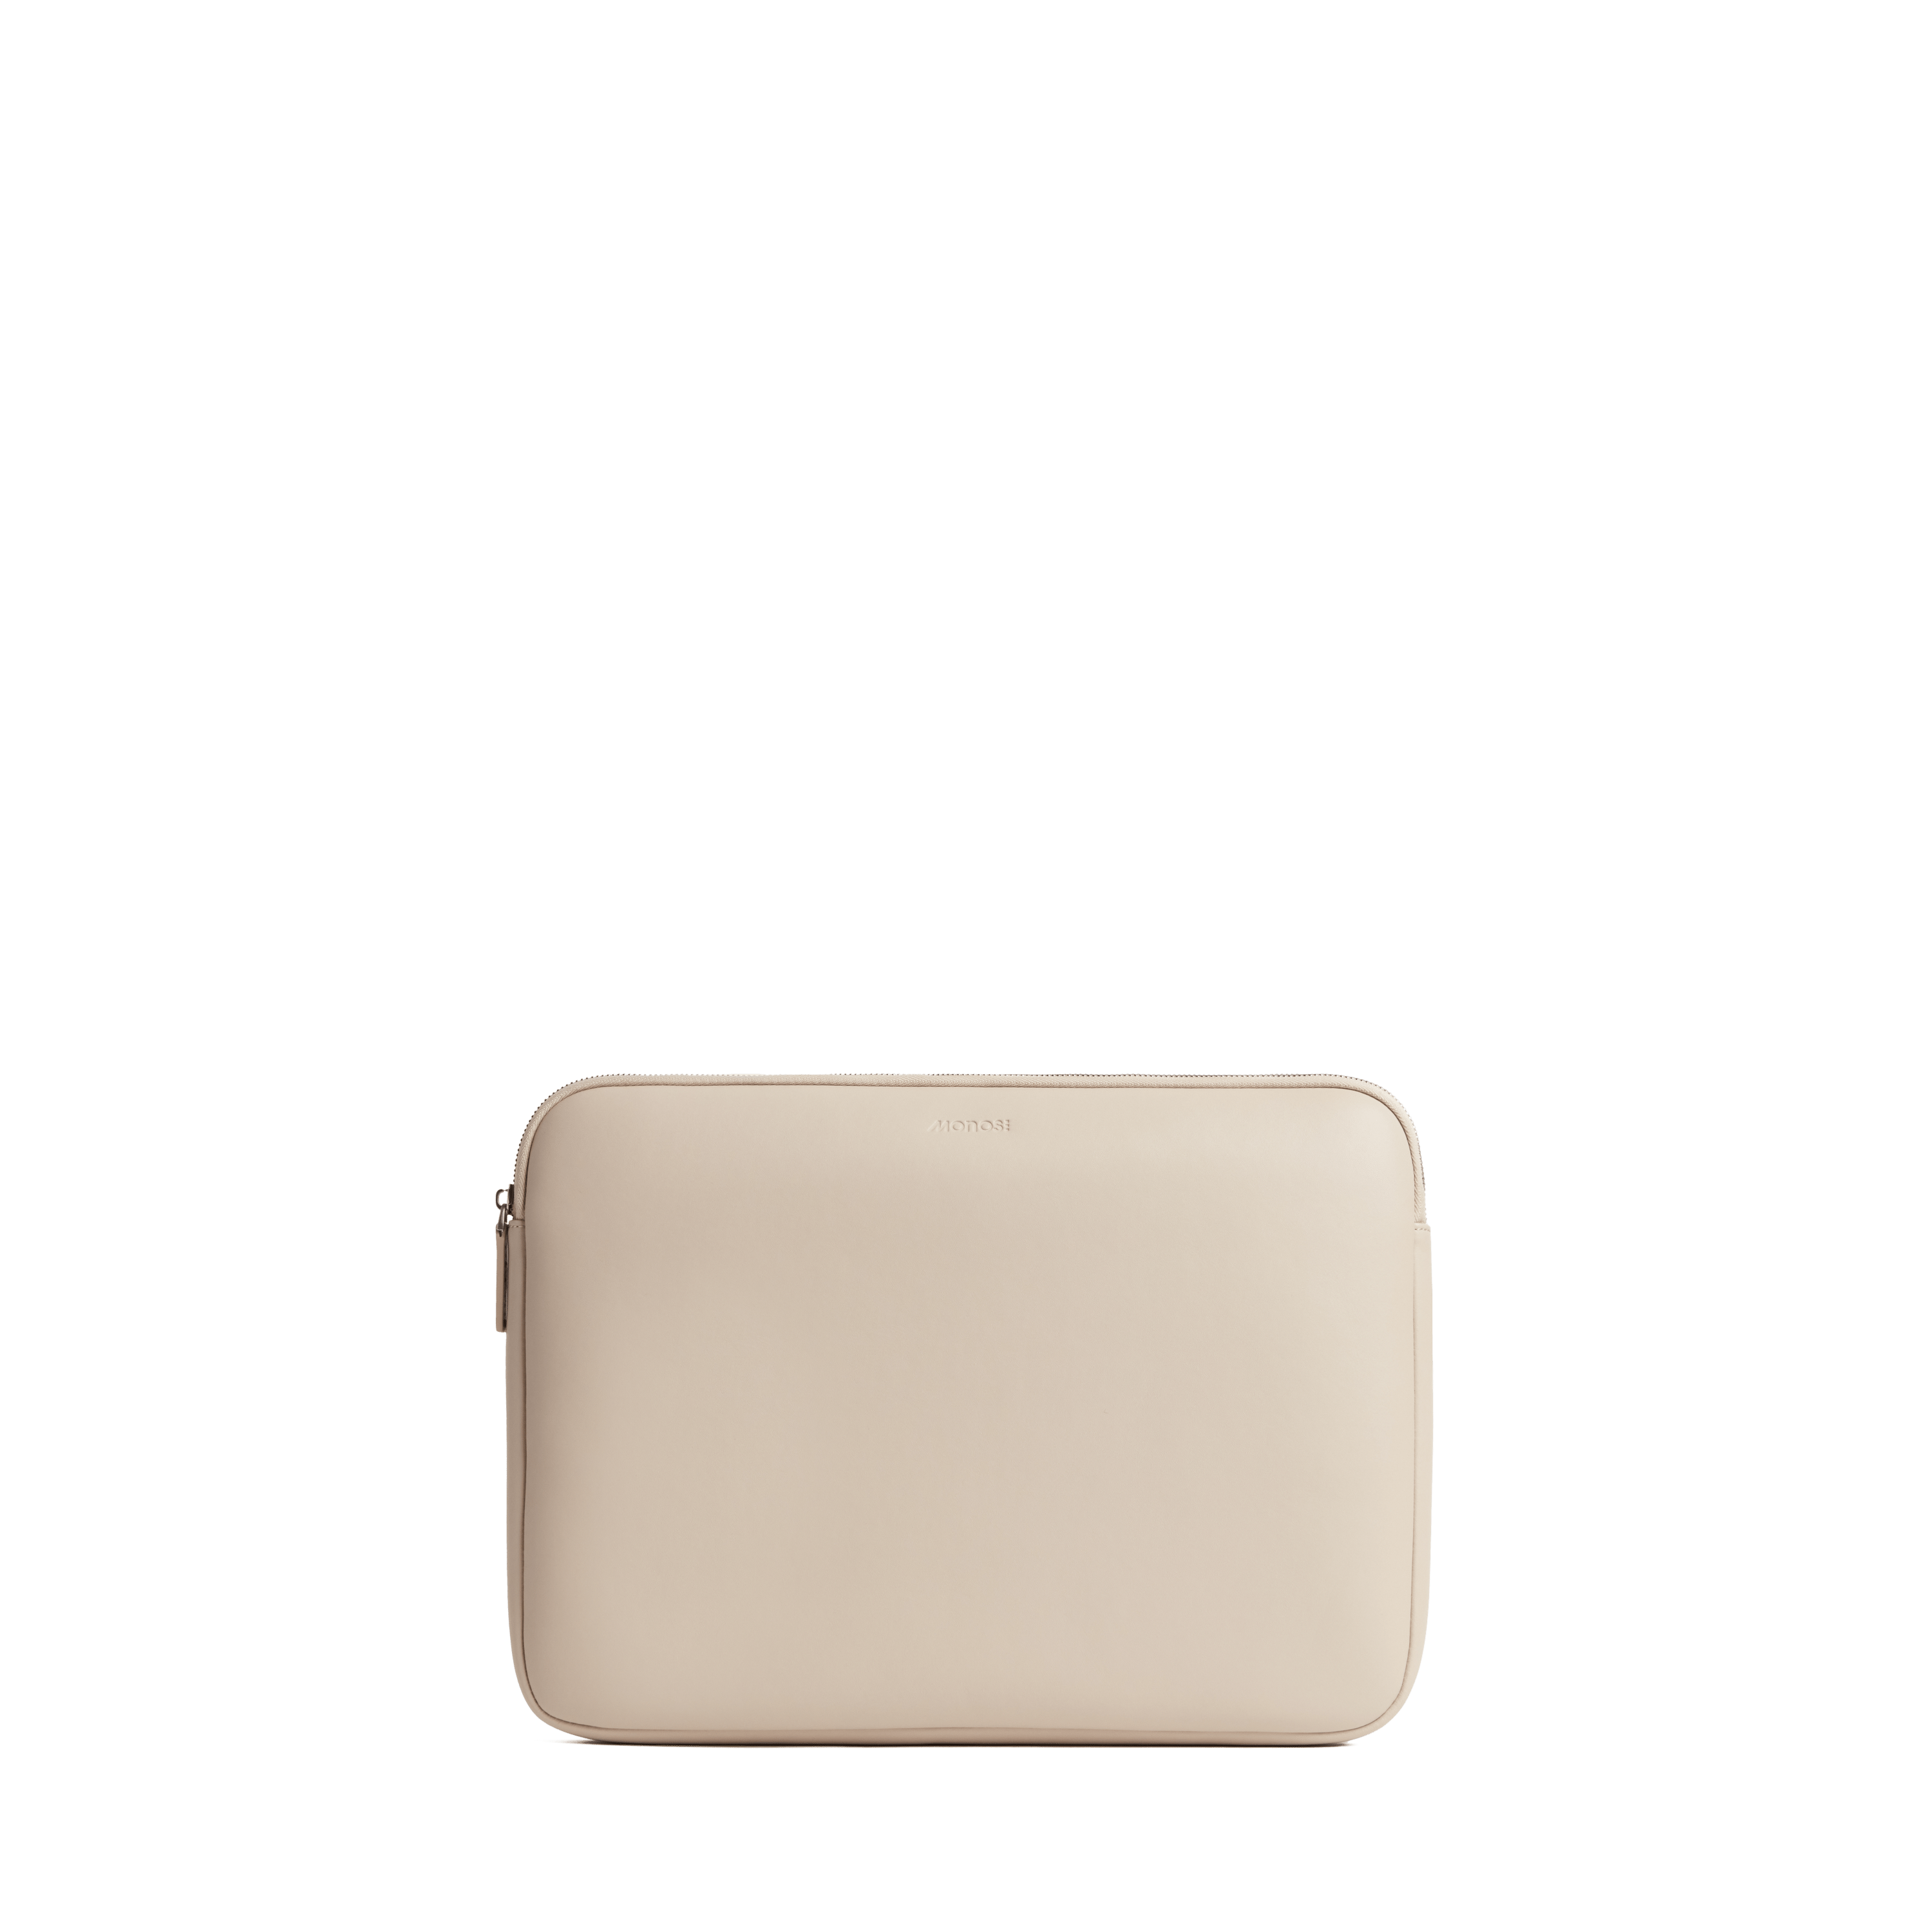 Icasso Laptop Bag 15-16 Inch,laptop Carrying Case With Shoulder Strap,notebook Sleeve,protective Messenger Handbag